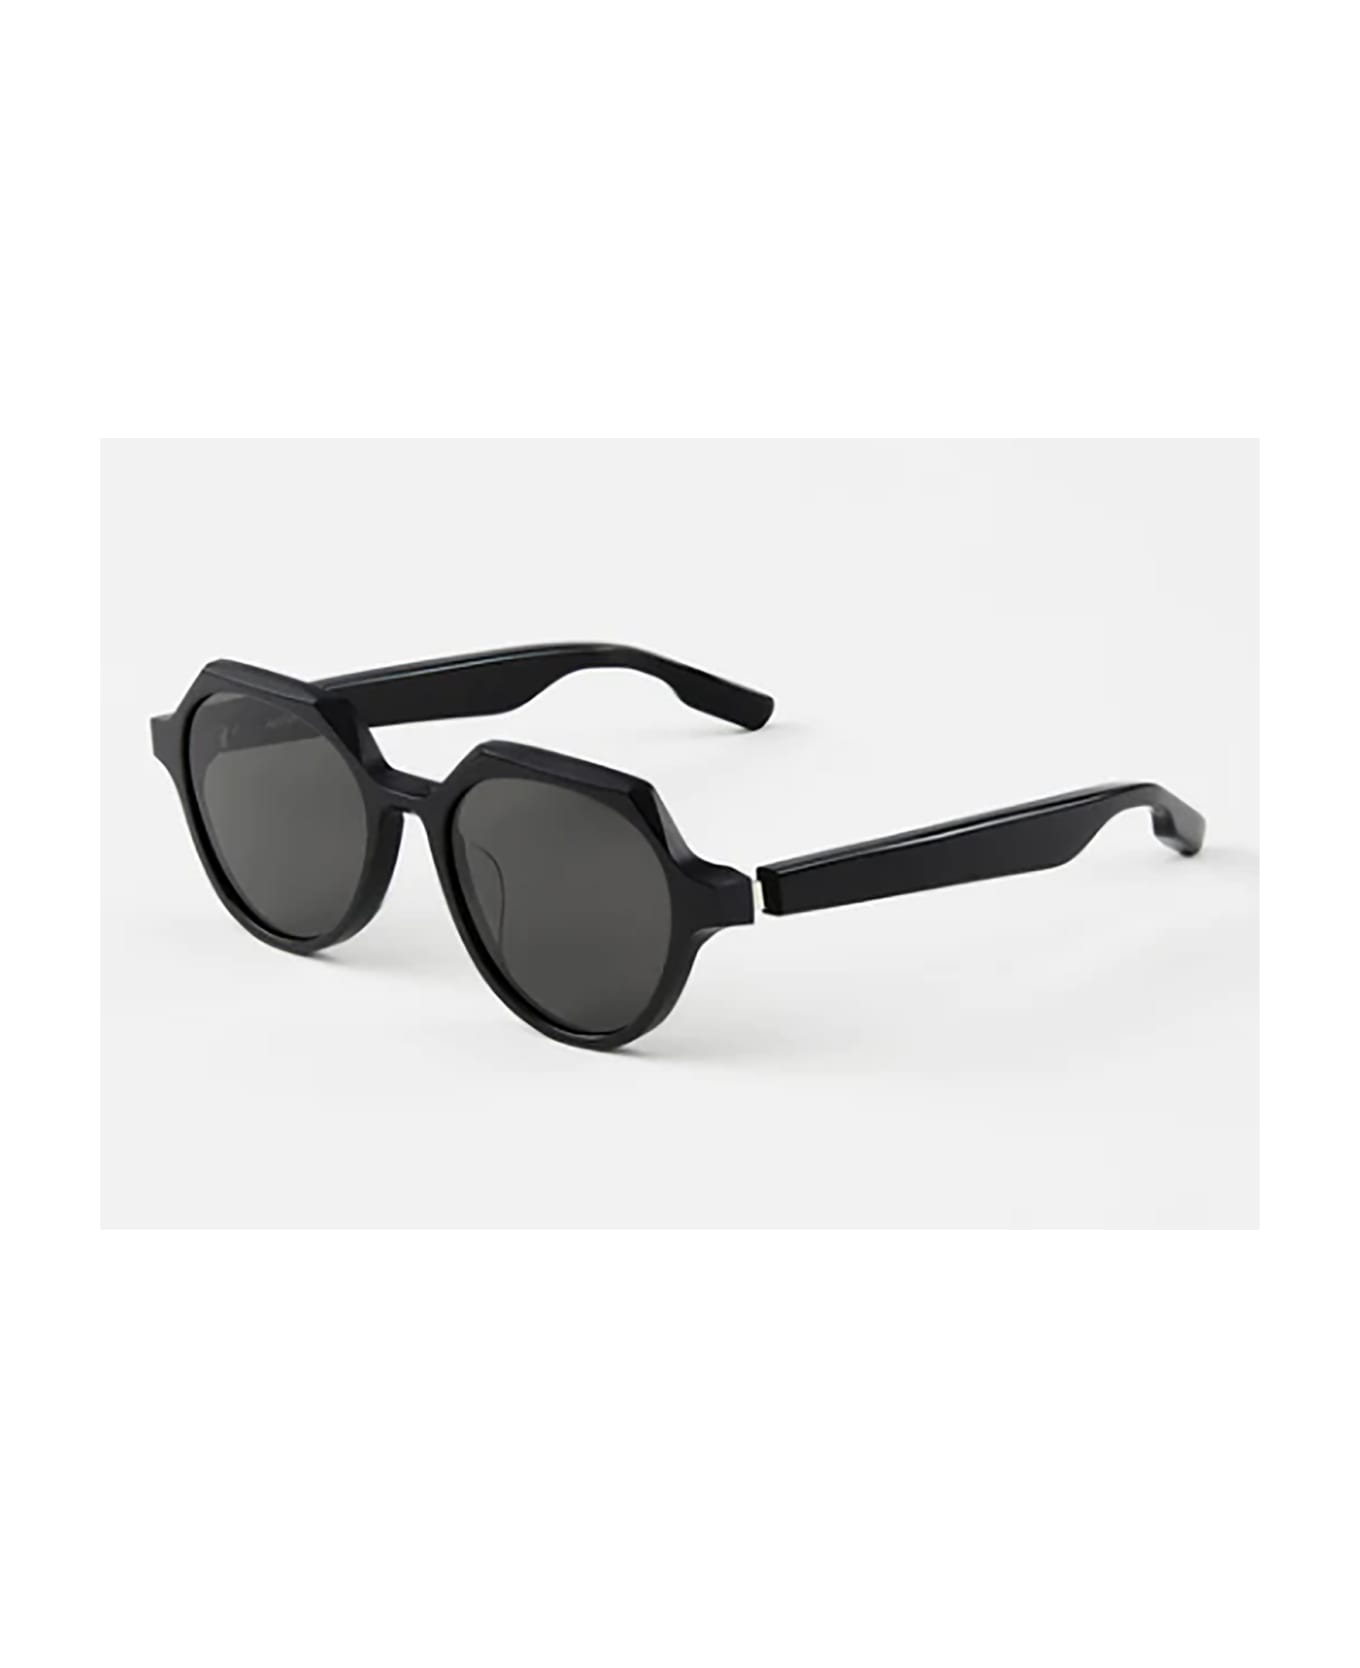 Aether R2/S Sunglasses - Black